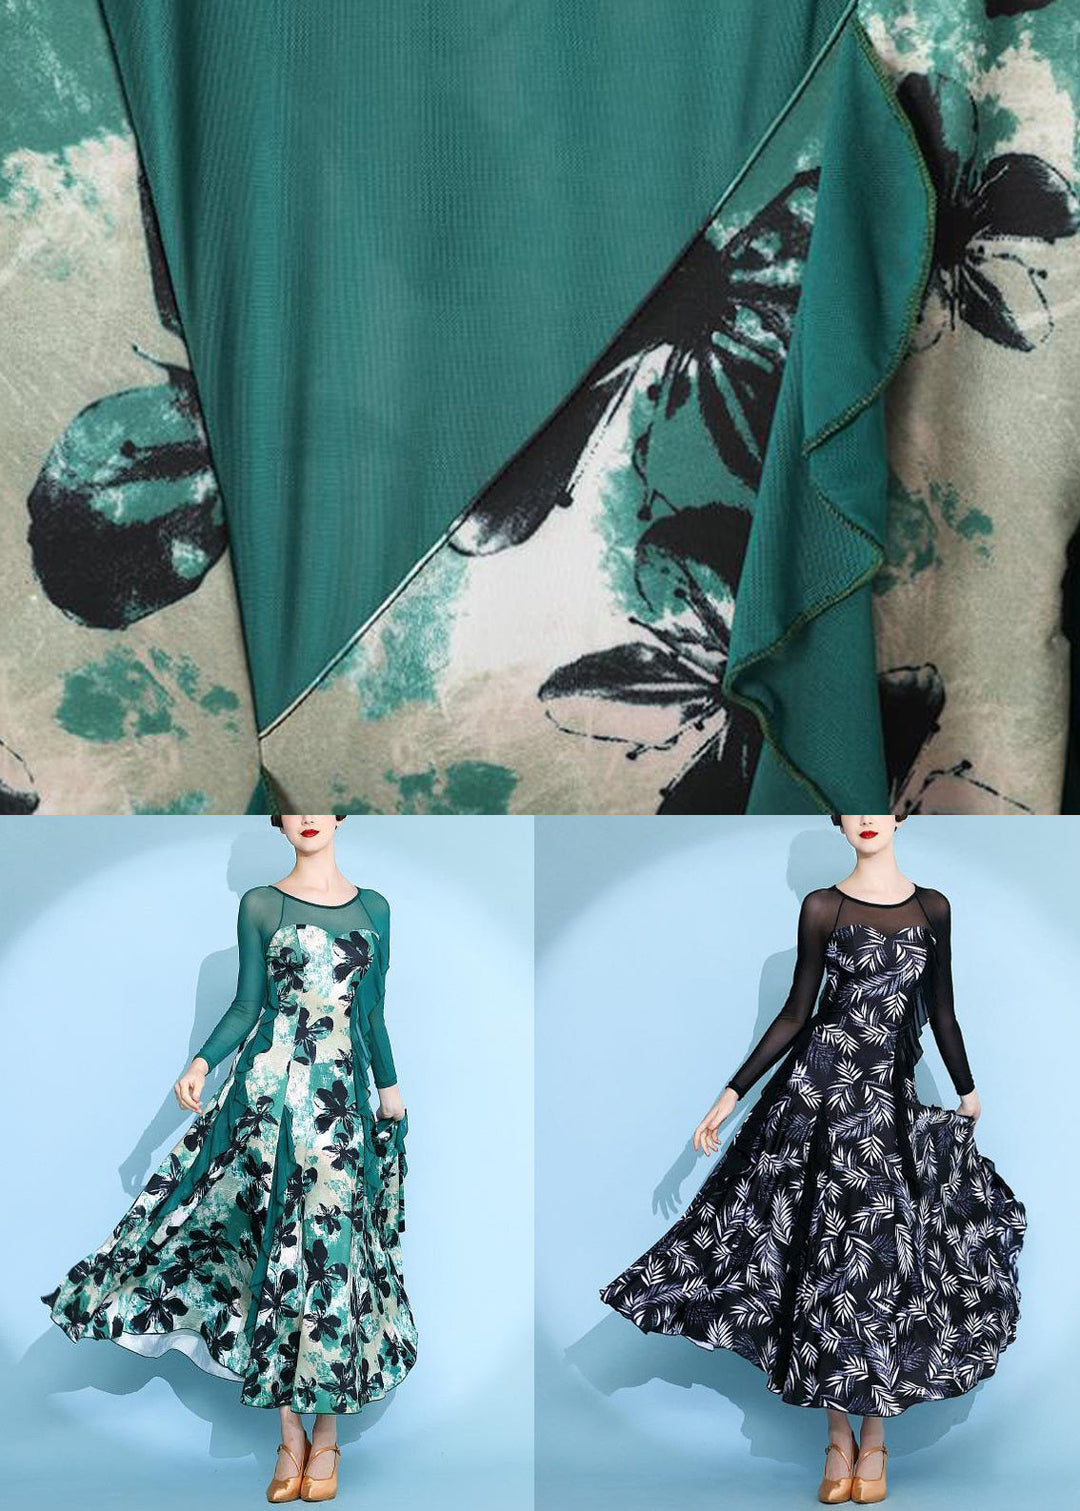 Unique Green Print Patchwork Chiffon Maxi Dresses Spring